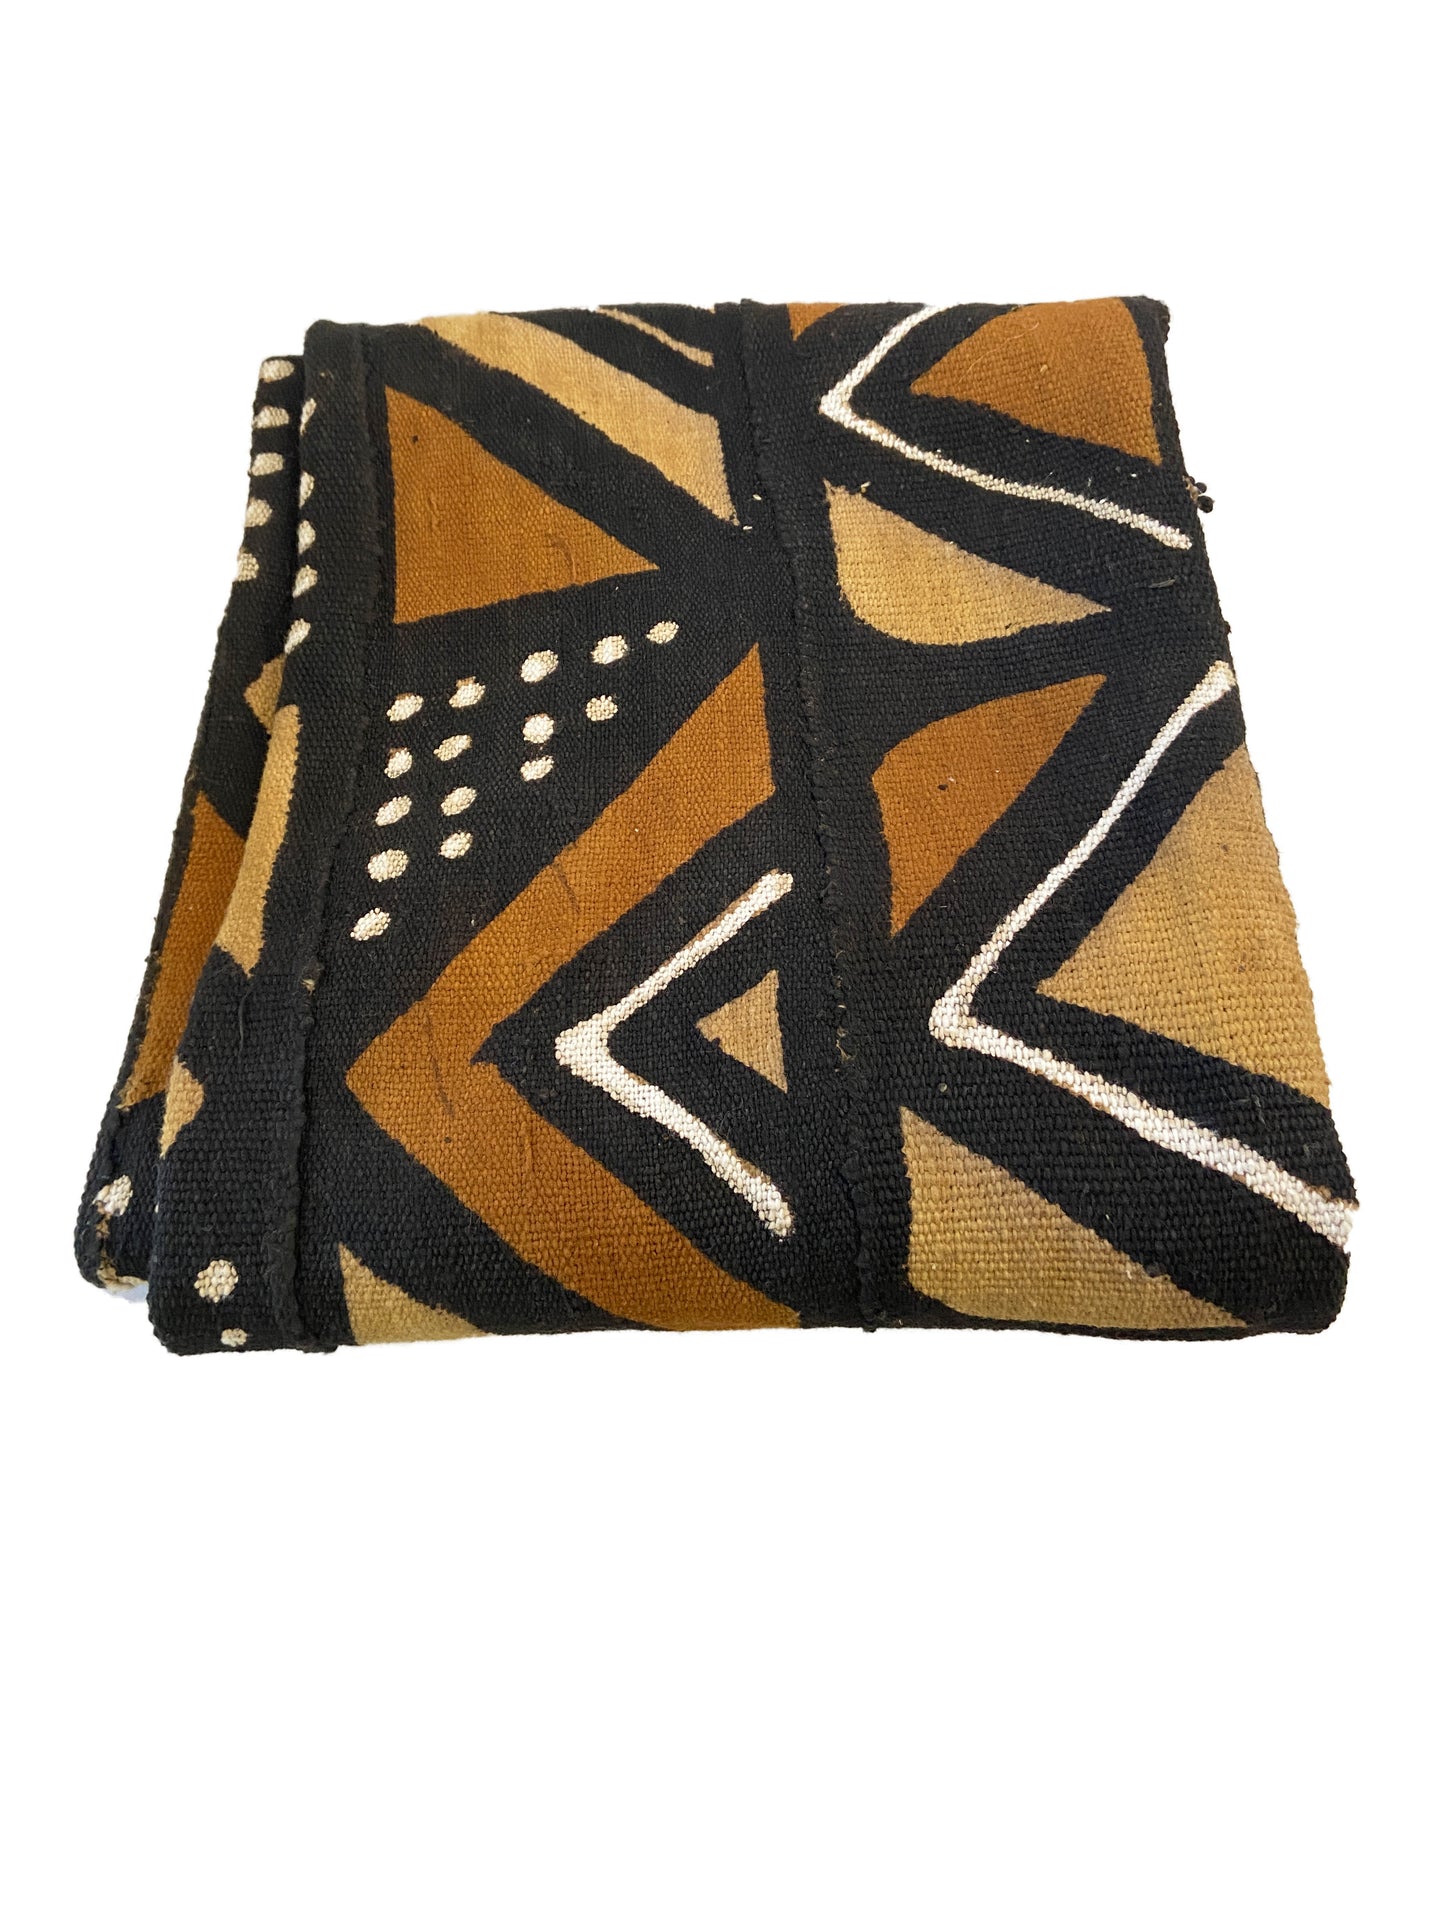 African LG Brown/Mustard/Black/White Mud Cloth/ Blanket Mali 64" by 40" # 1987